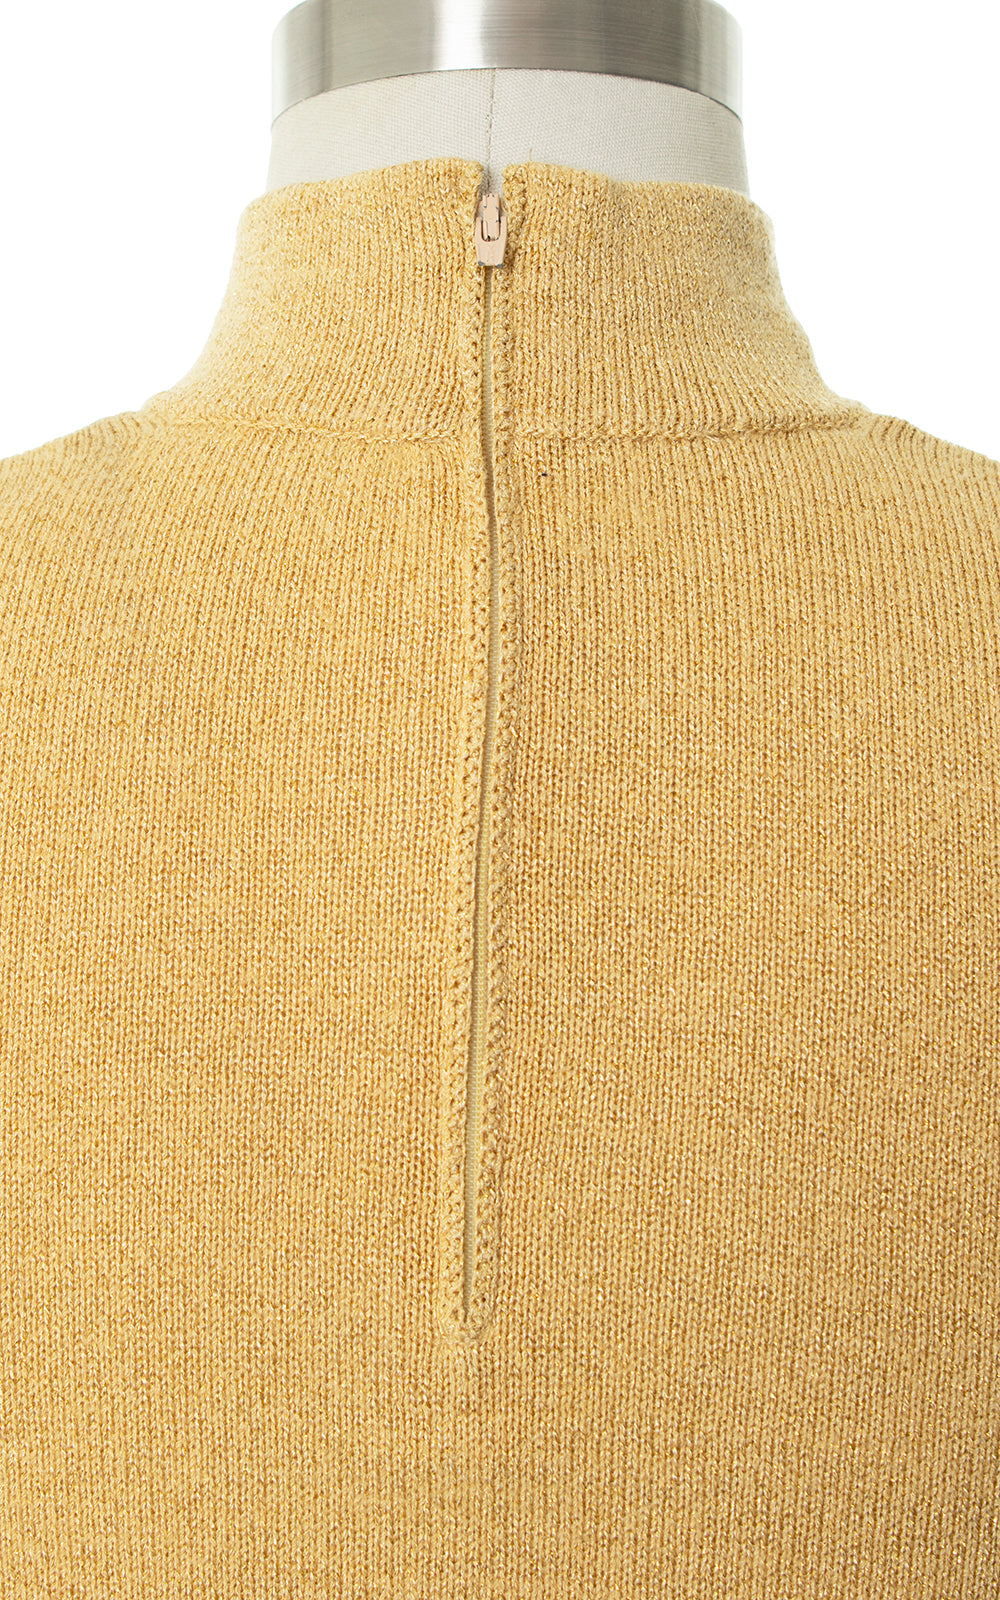 Vintage 1980s 80s ST. JOHN Metallic Gold Knit Mock Neck Sweater Top Birthday Life Vintage